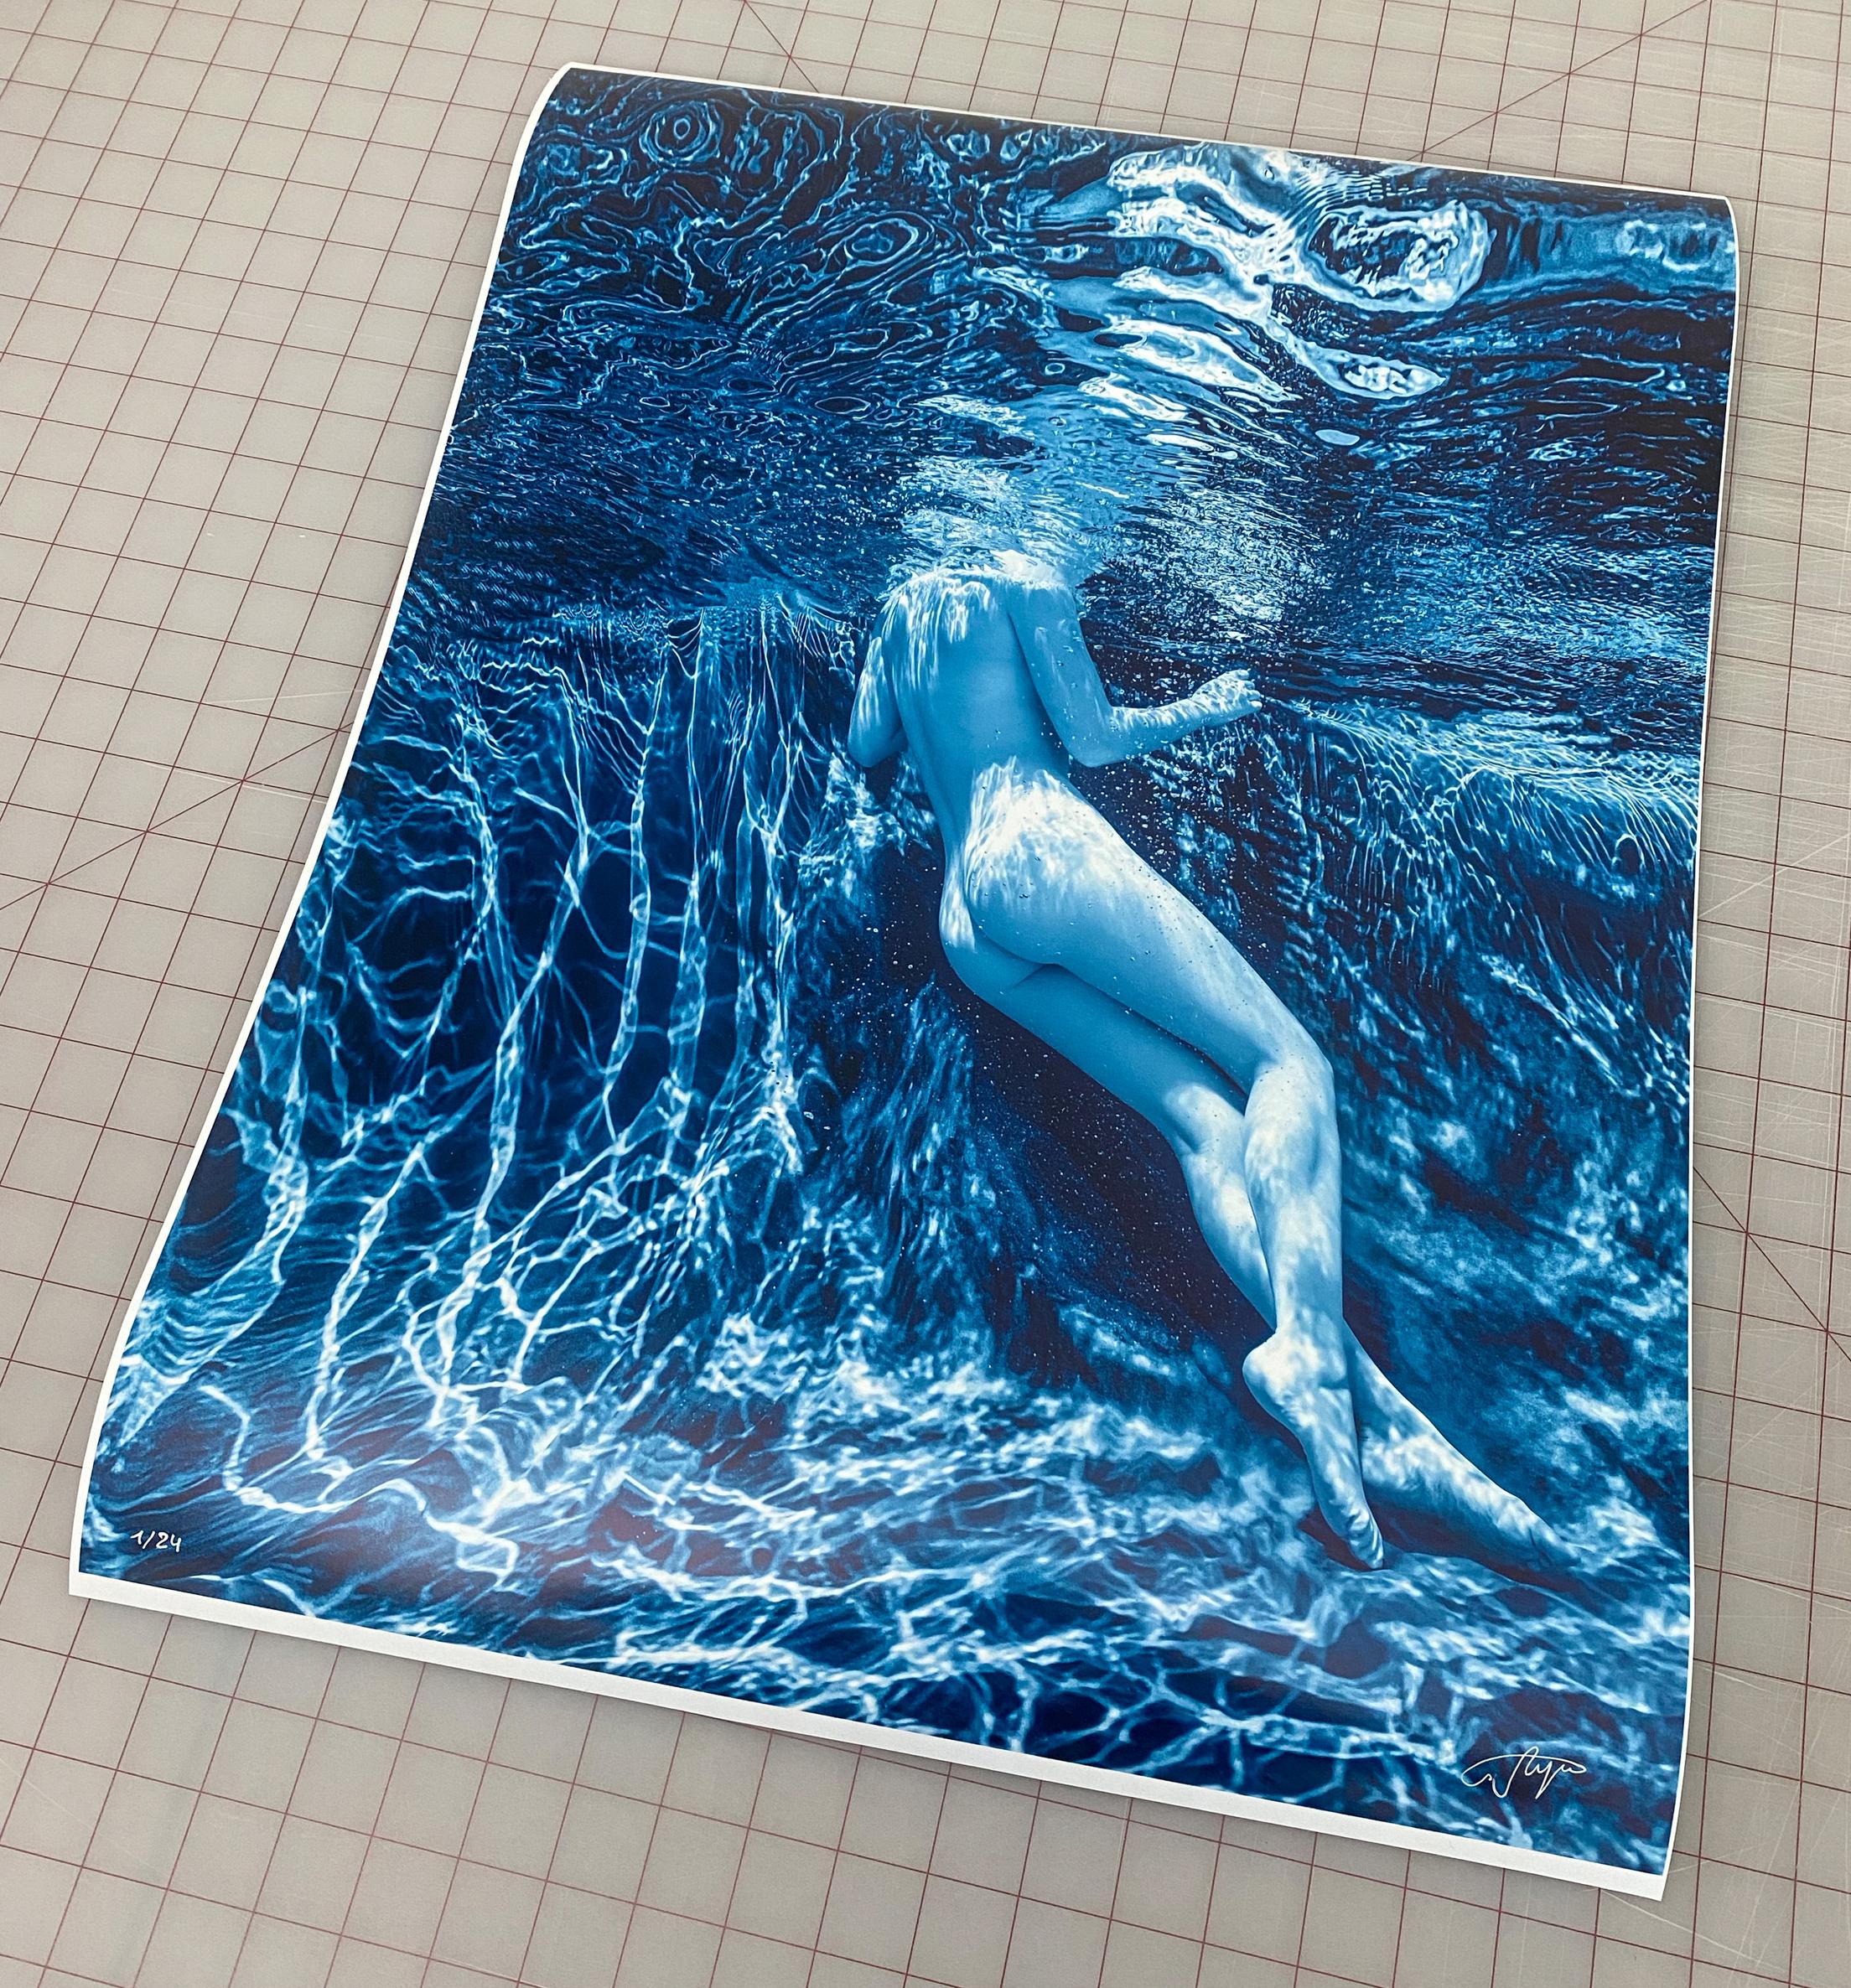 Moonlight IV - underwater nude photograph - archival pigment print 46x35